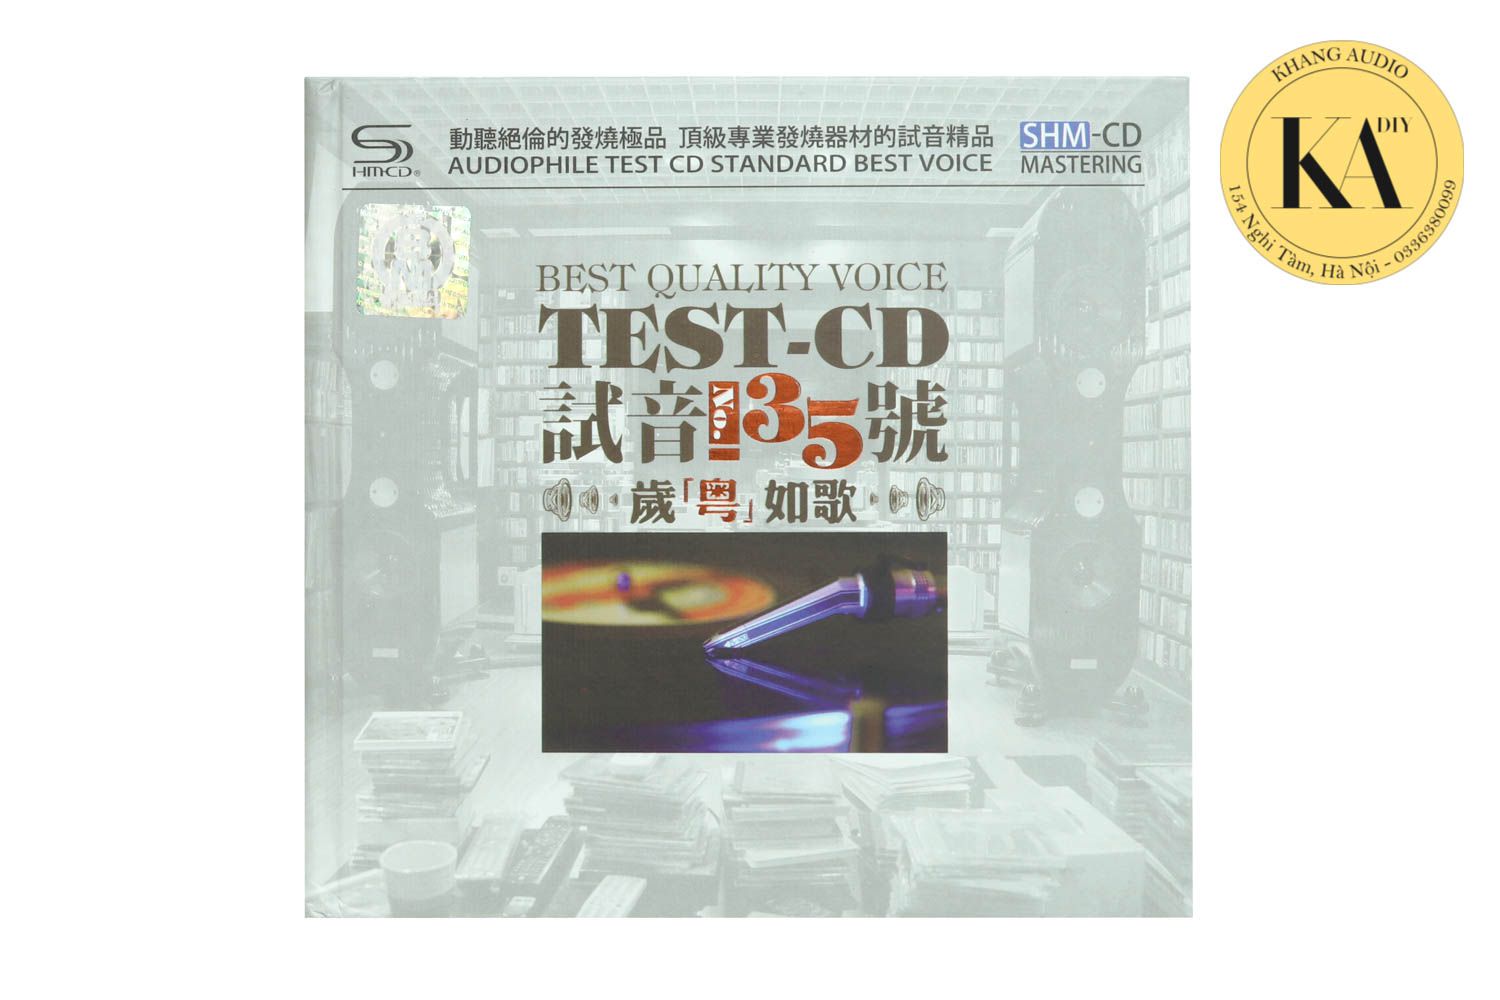 Test CD No.35 Khang Audio 0336380099